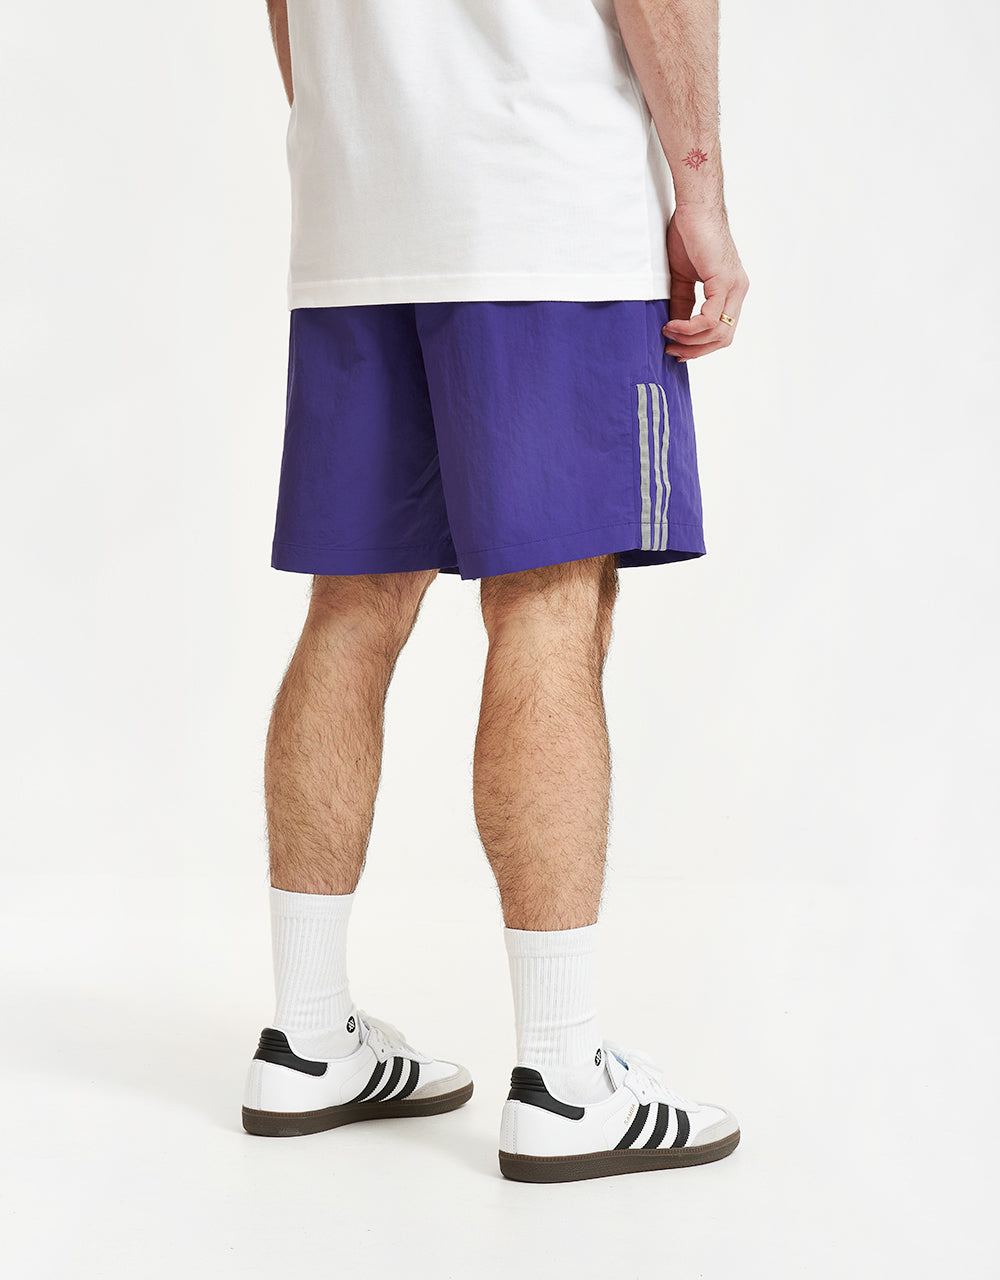 adidas Graphic Water Short - Collegiate Purple/Grey Three